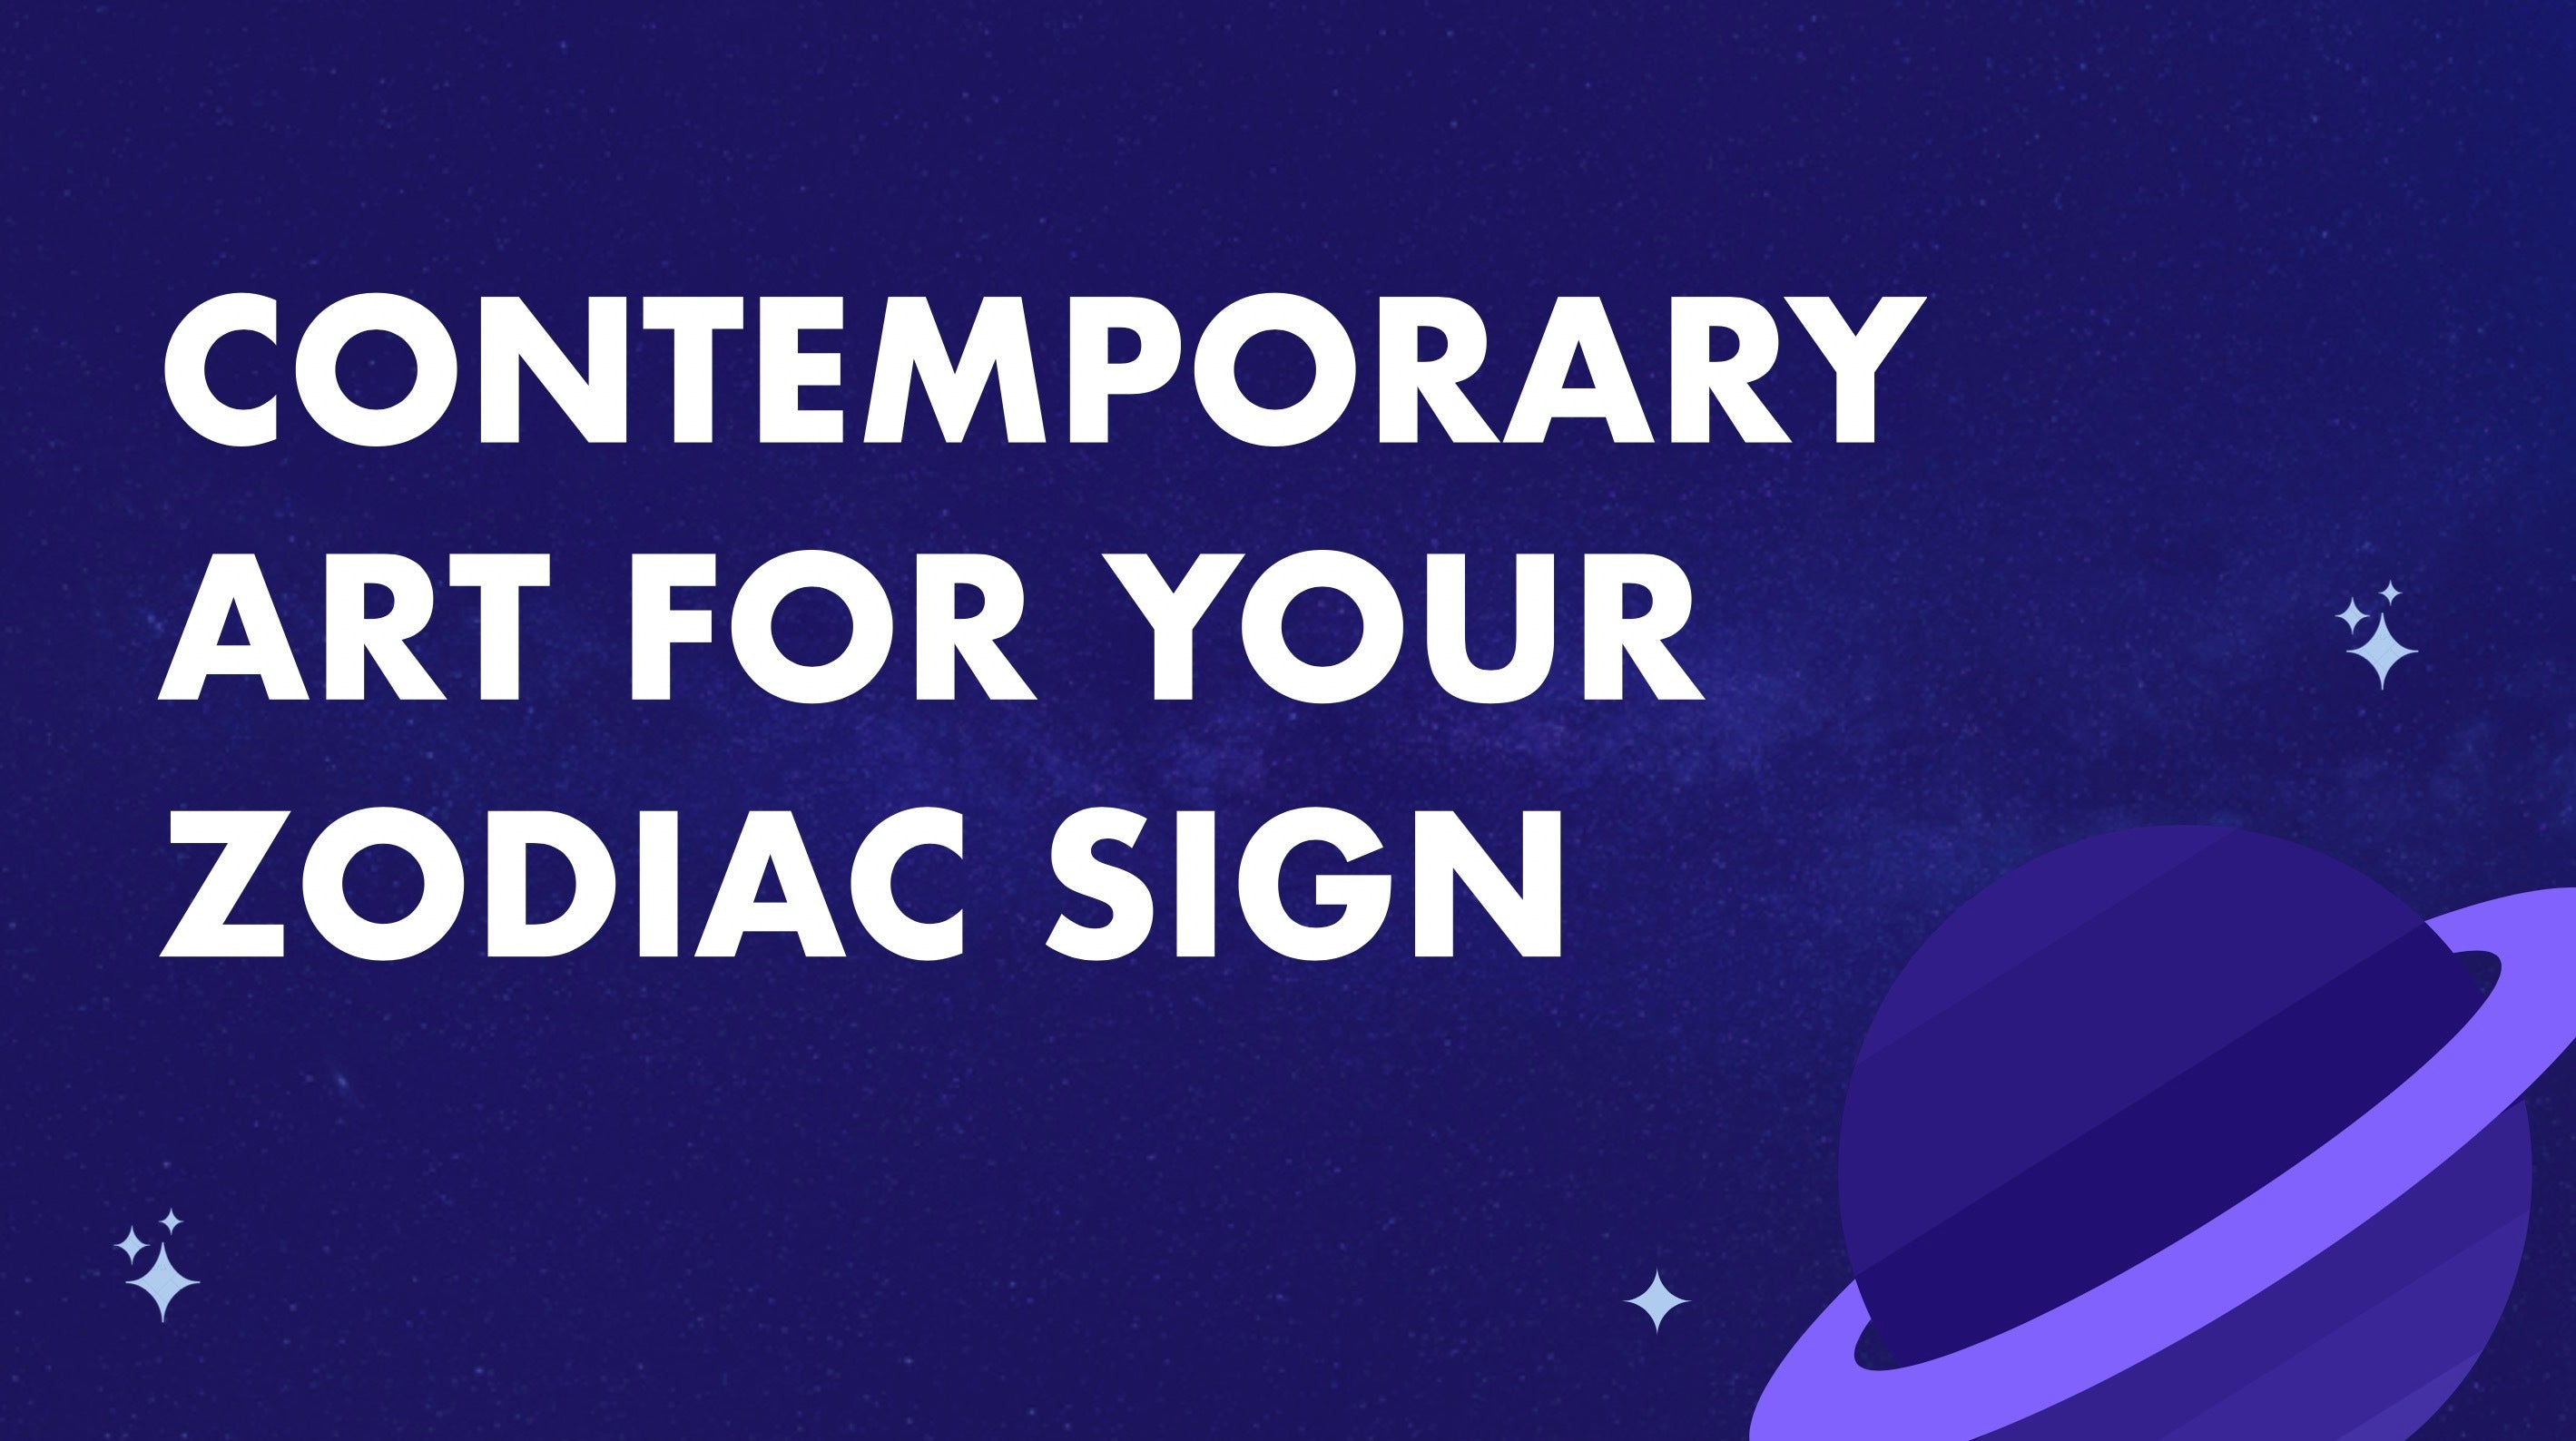 CONTEMPORARY ART FOR YOUR ZODIAC SIGN